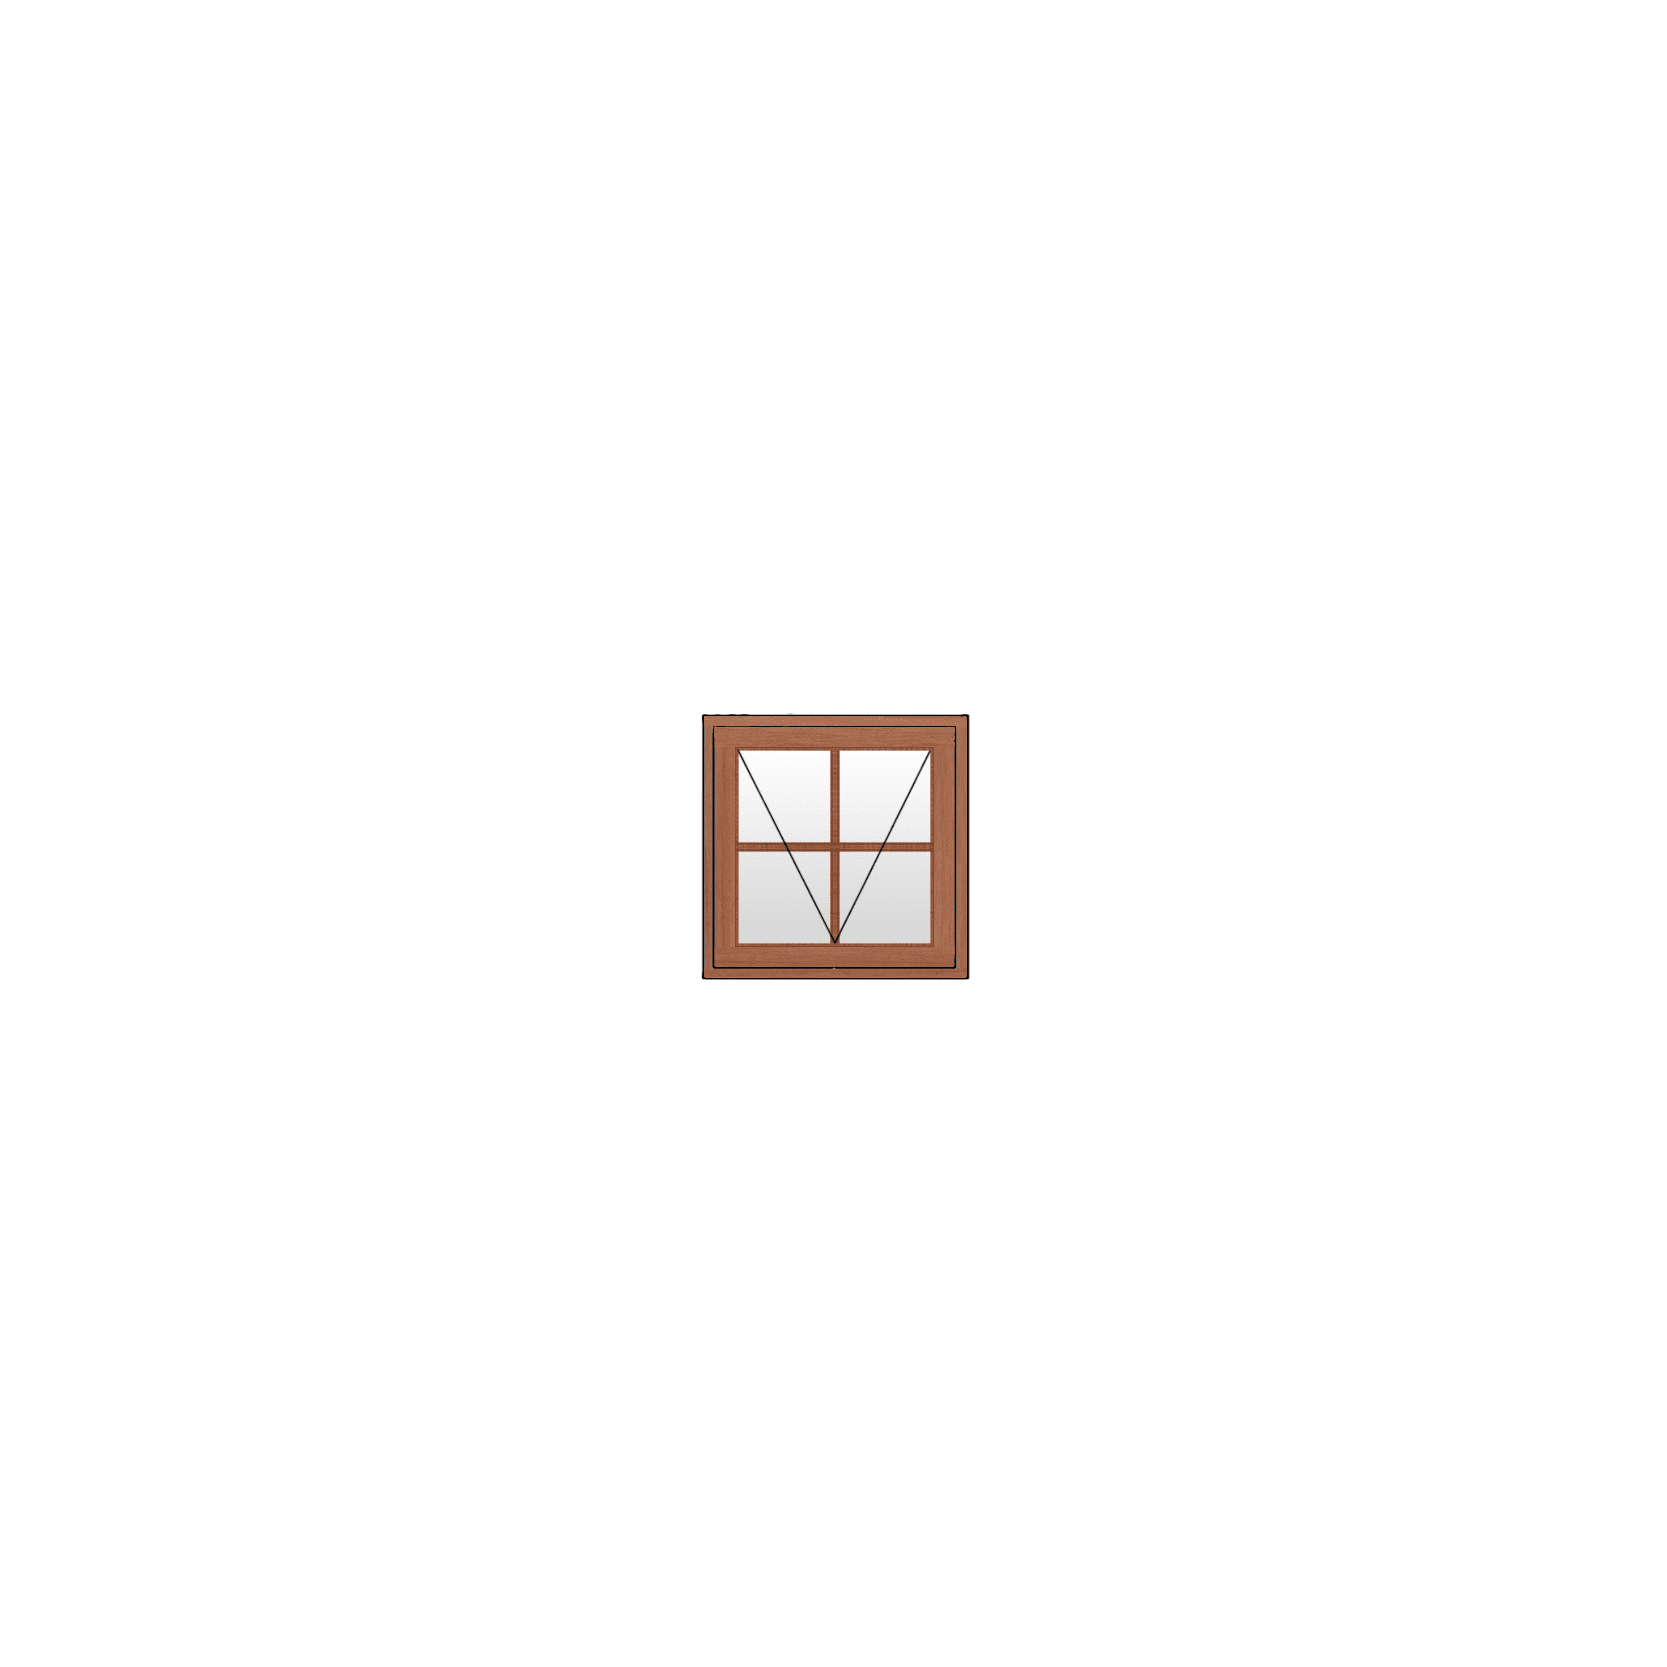 wooden cottage pane window frame